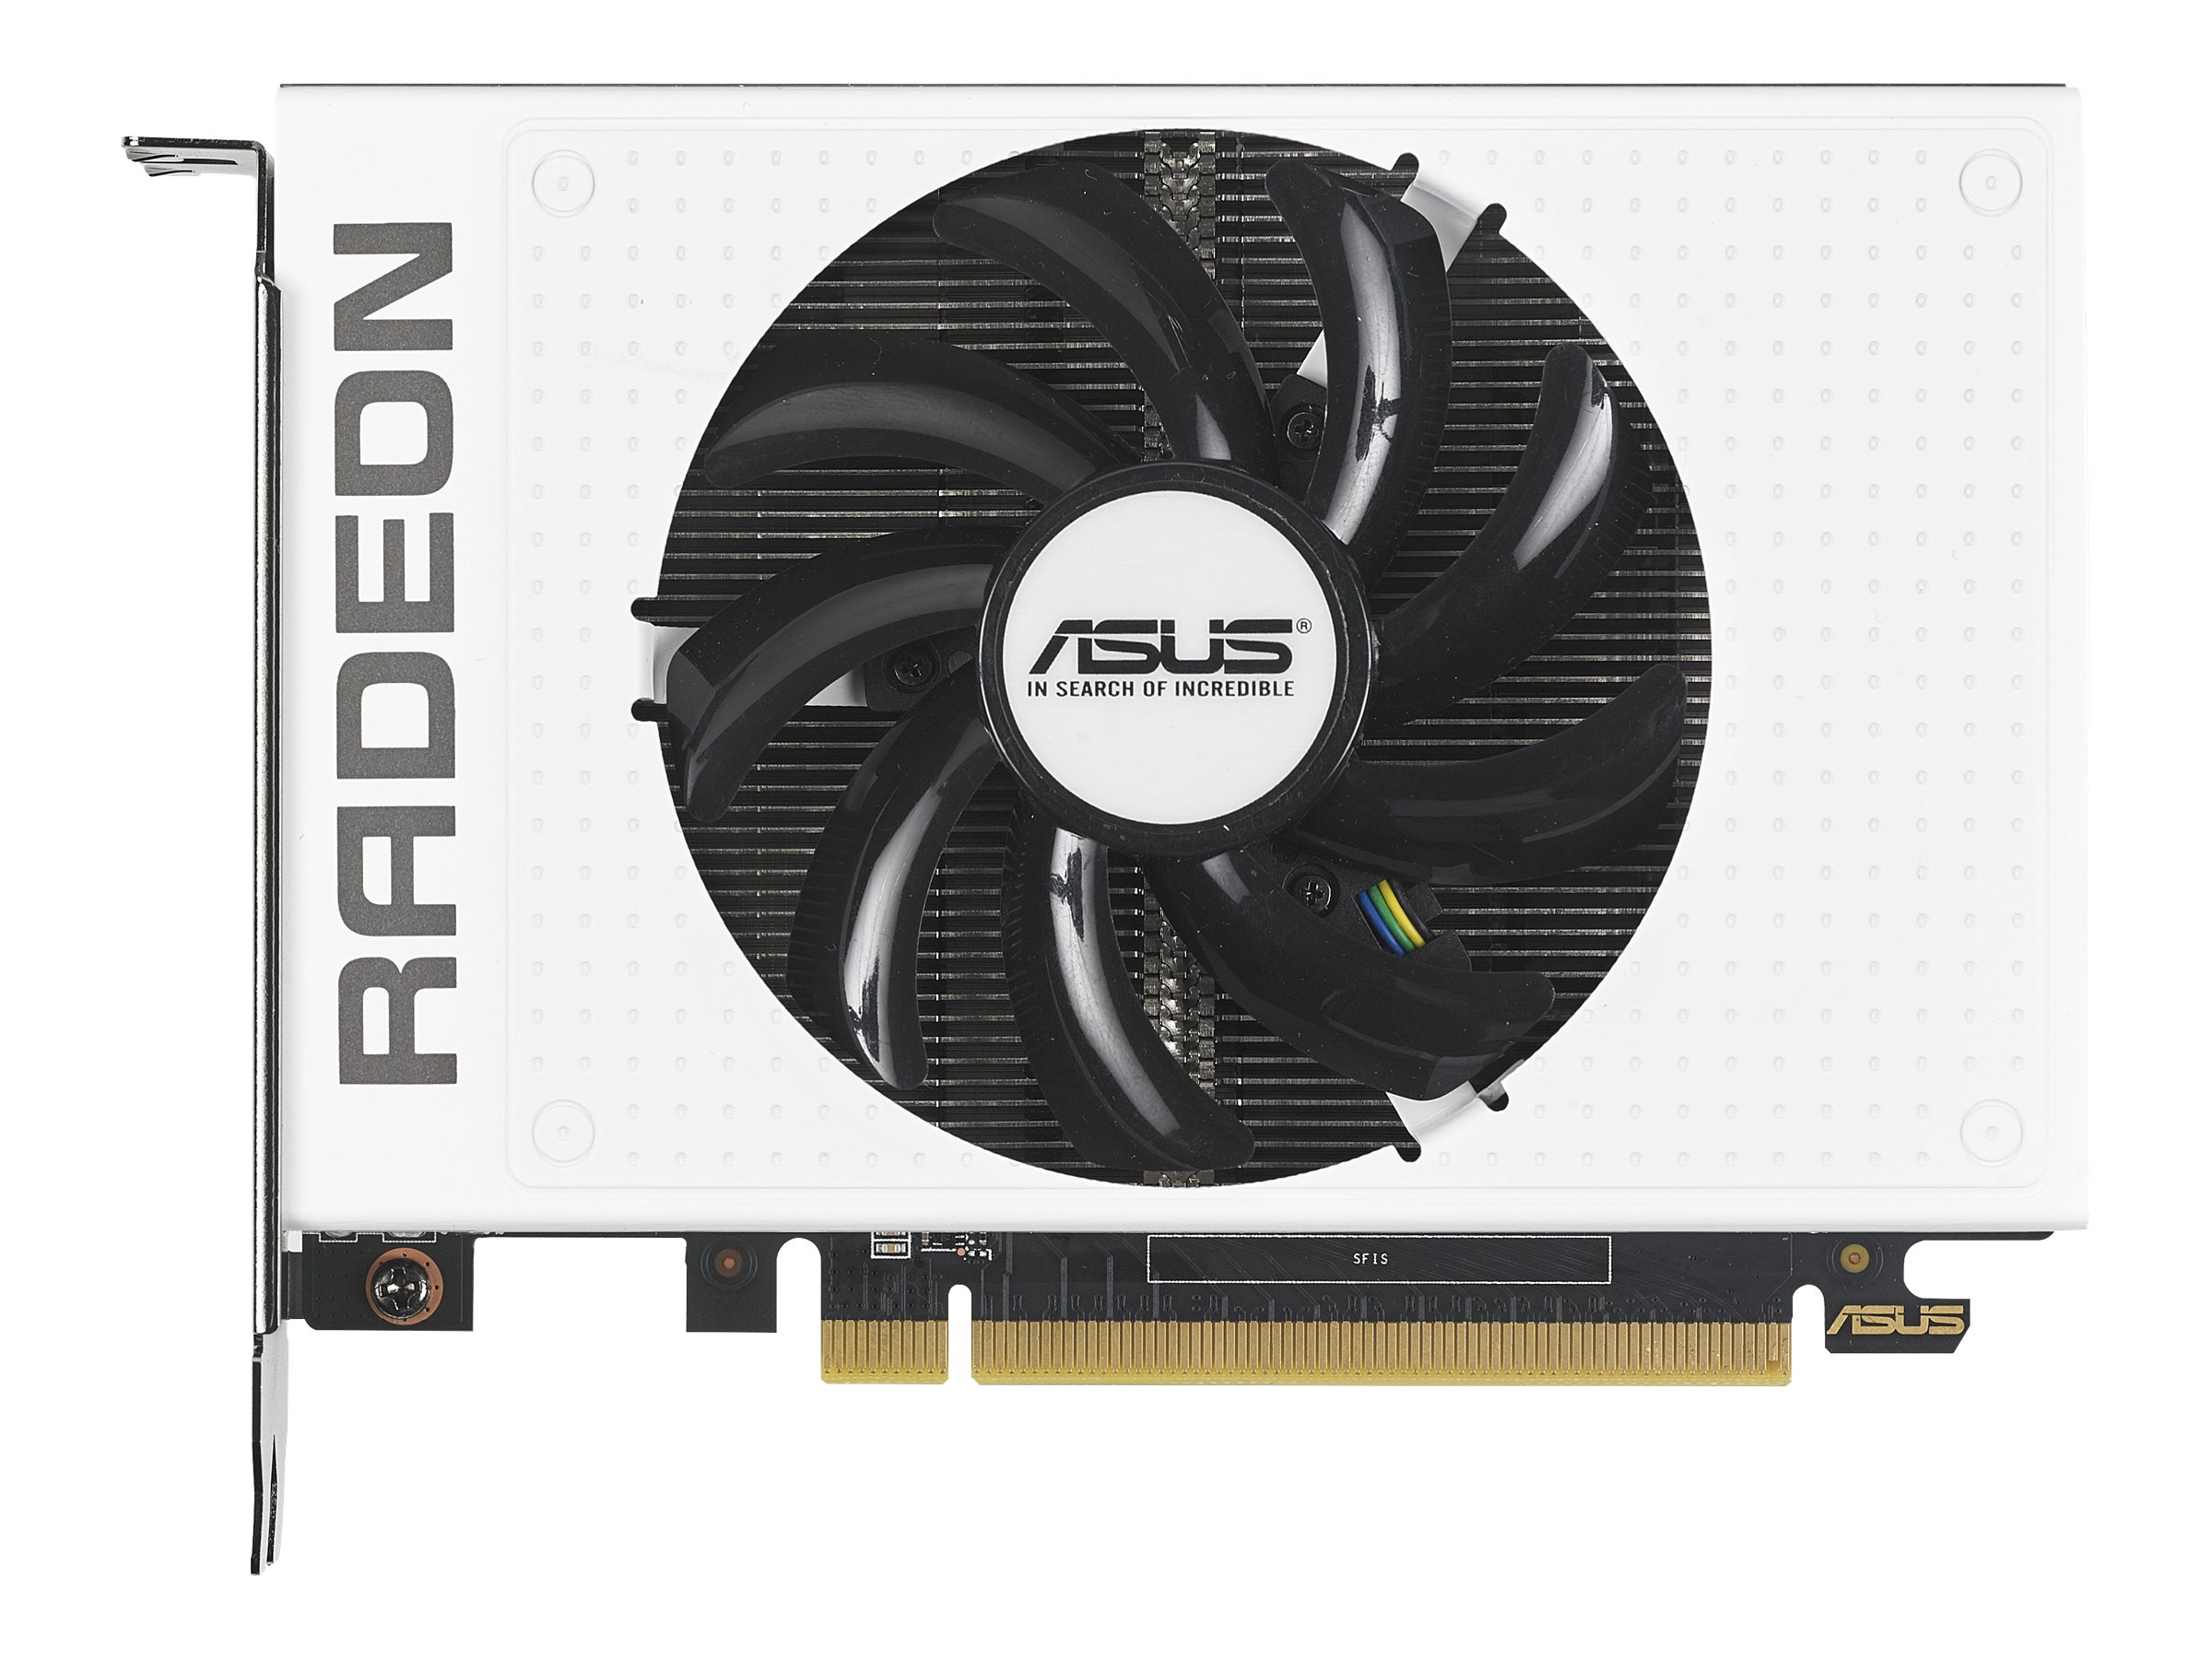 ASUS R9NANO-4G-WHITE - Graphics card - Radeon R9 NANO - 4 GB HBM - PCIe 3.0 x16 - HDMI, 3 x DisplayPort - white - image 1 of 3